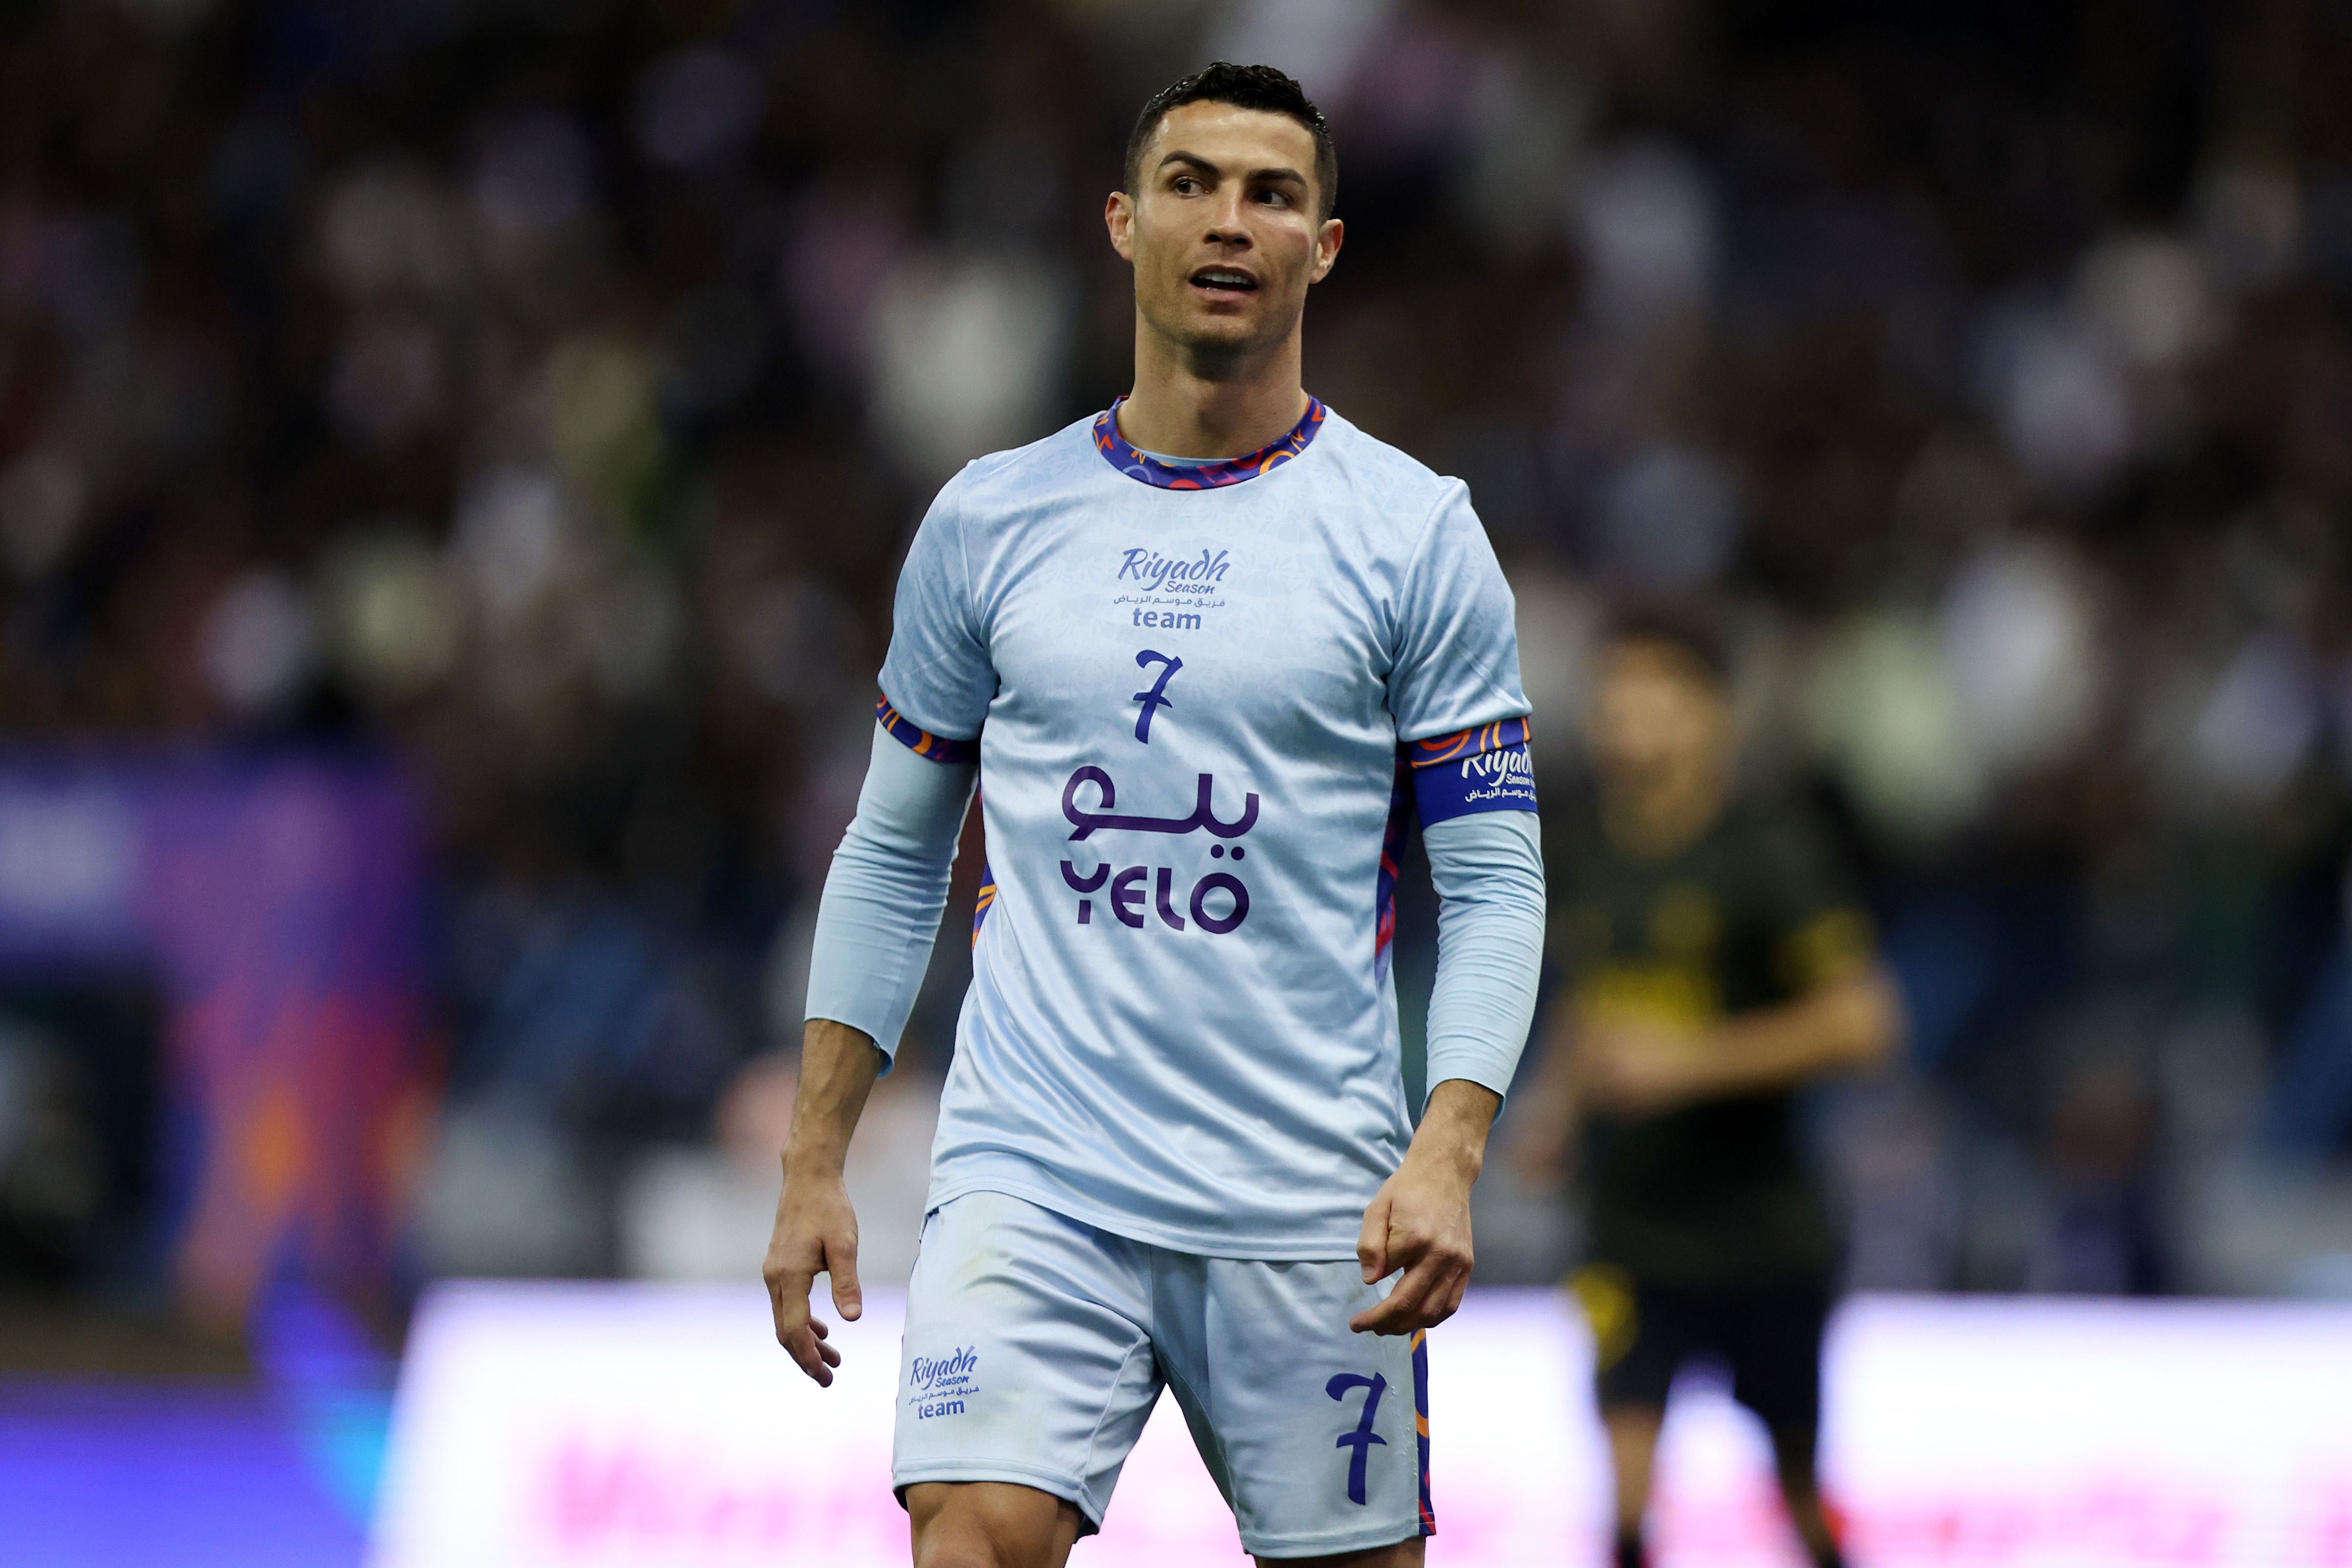 Ronaldo looks on while playing for Riyadh XI.